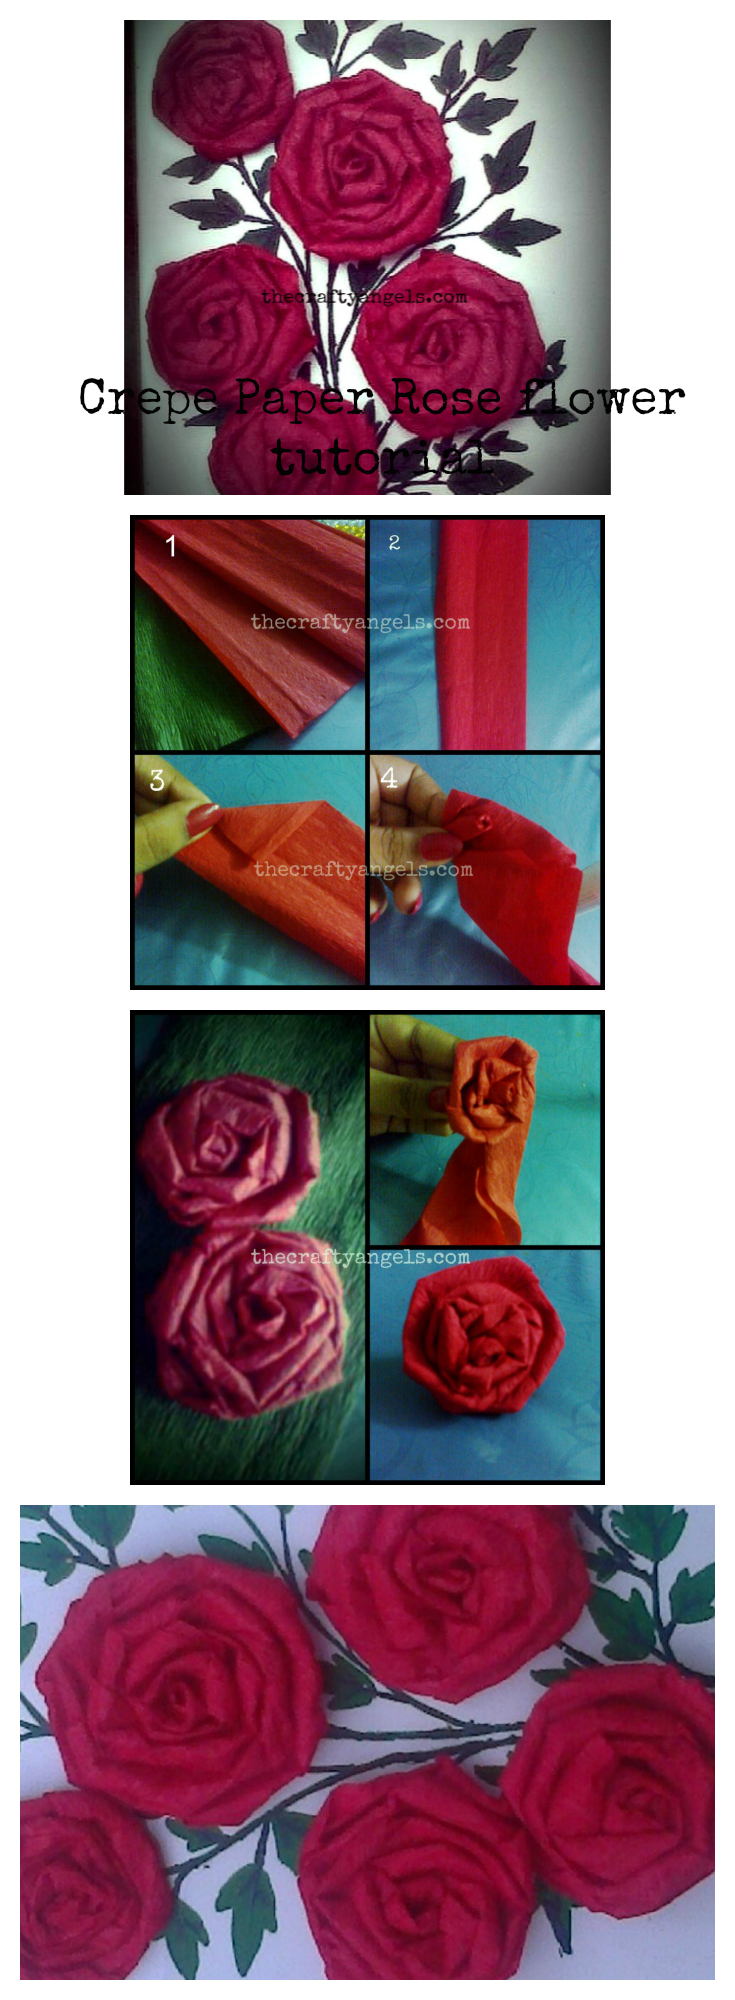 Crepe paper rose flower tutorial collage